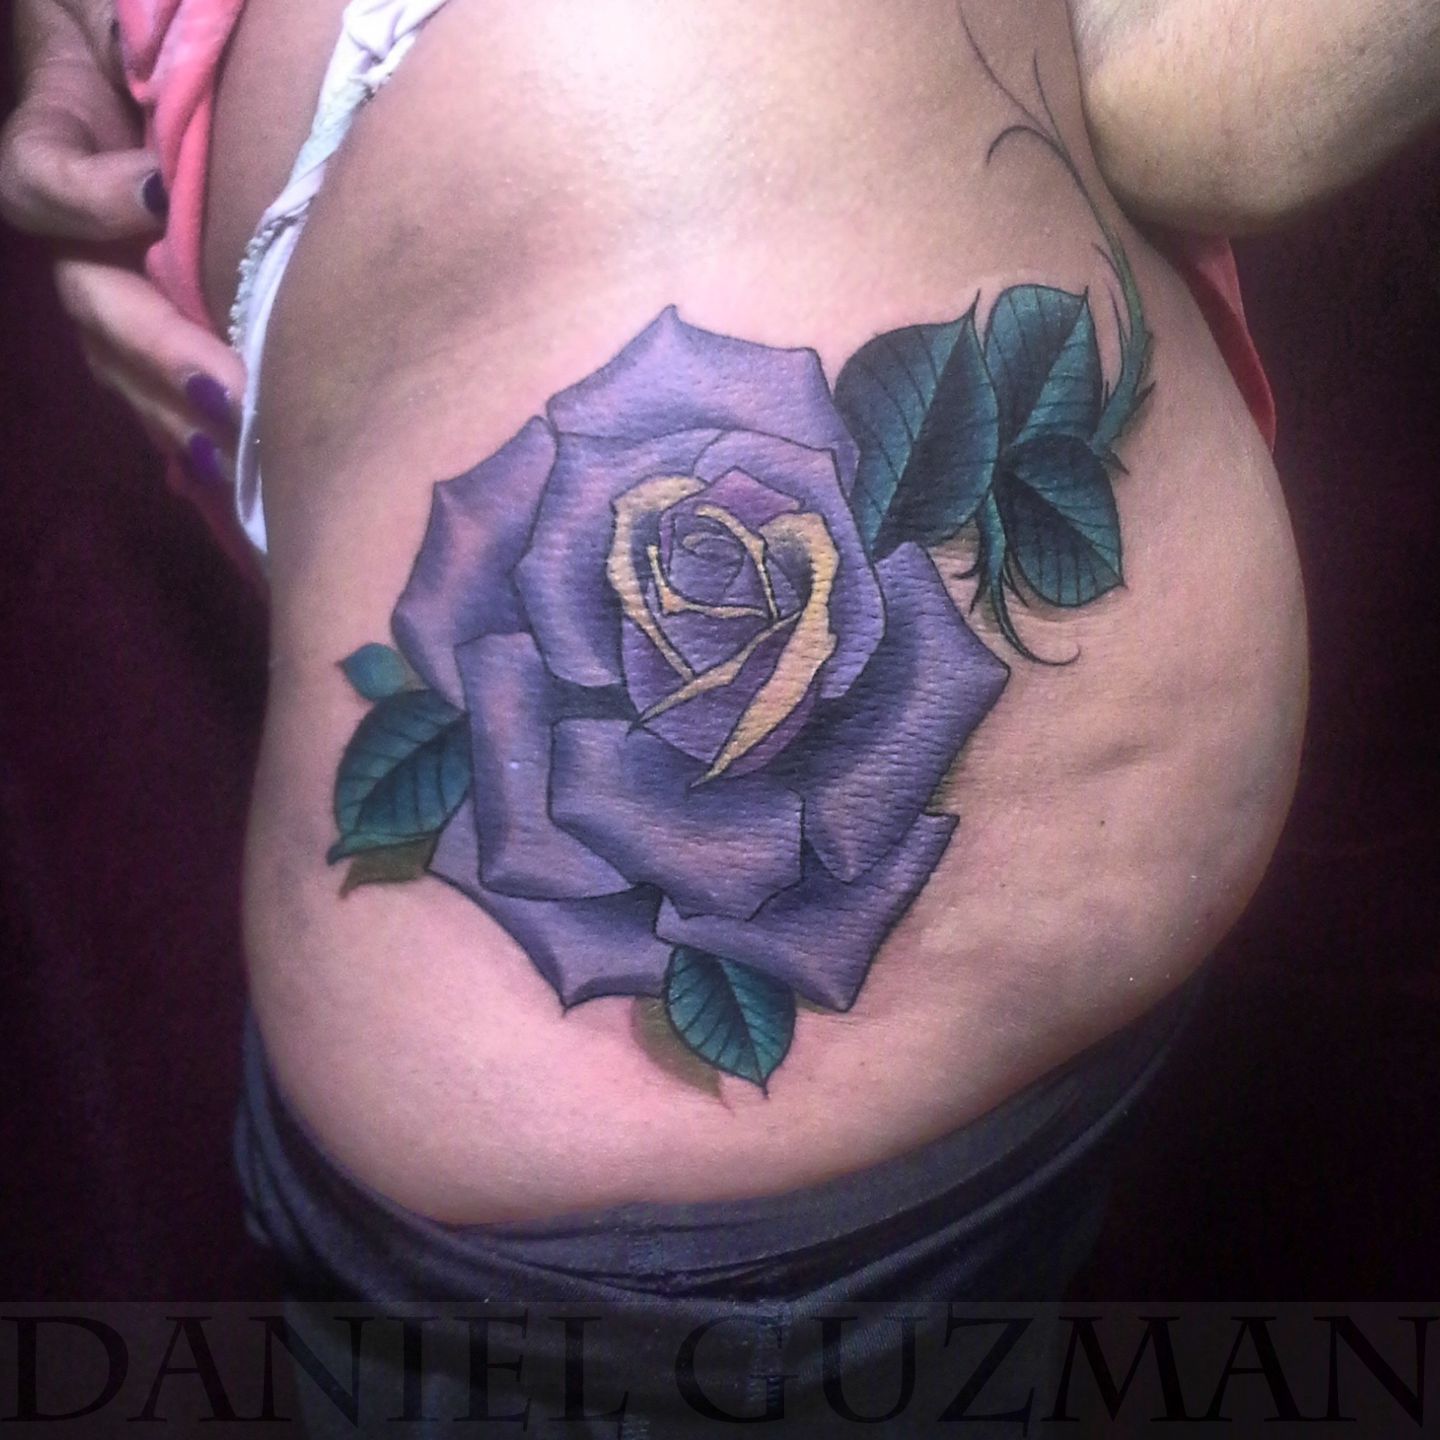 Danielguzmantattoos Neo Traditional Rose Rose Tattoo